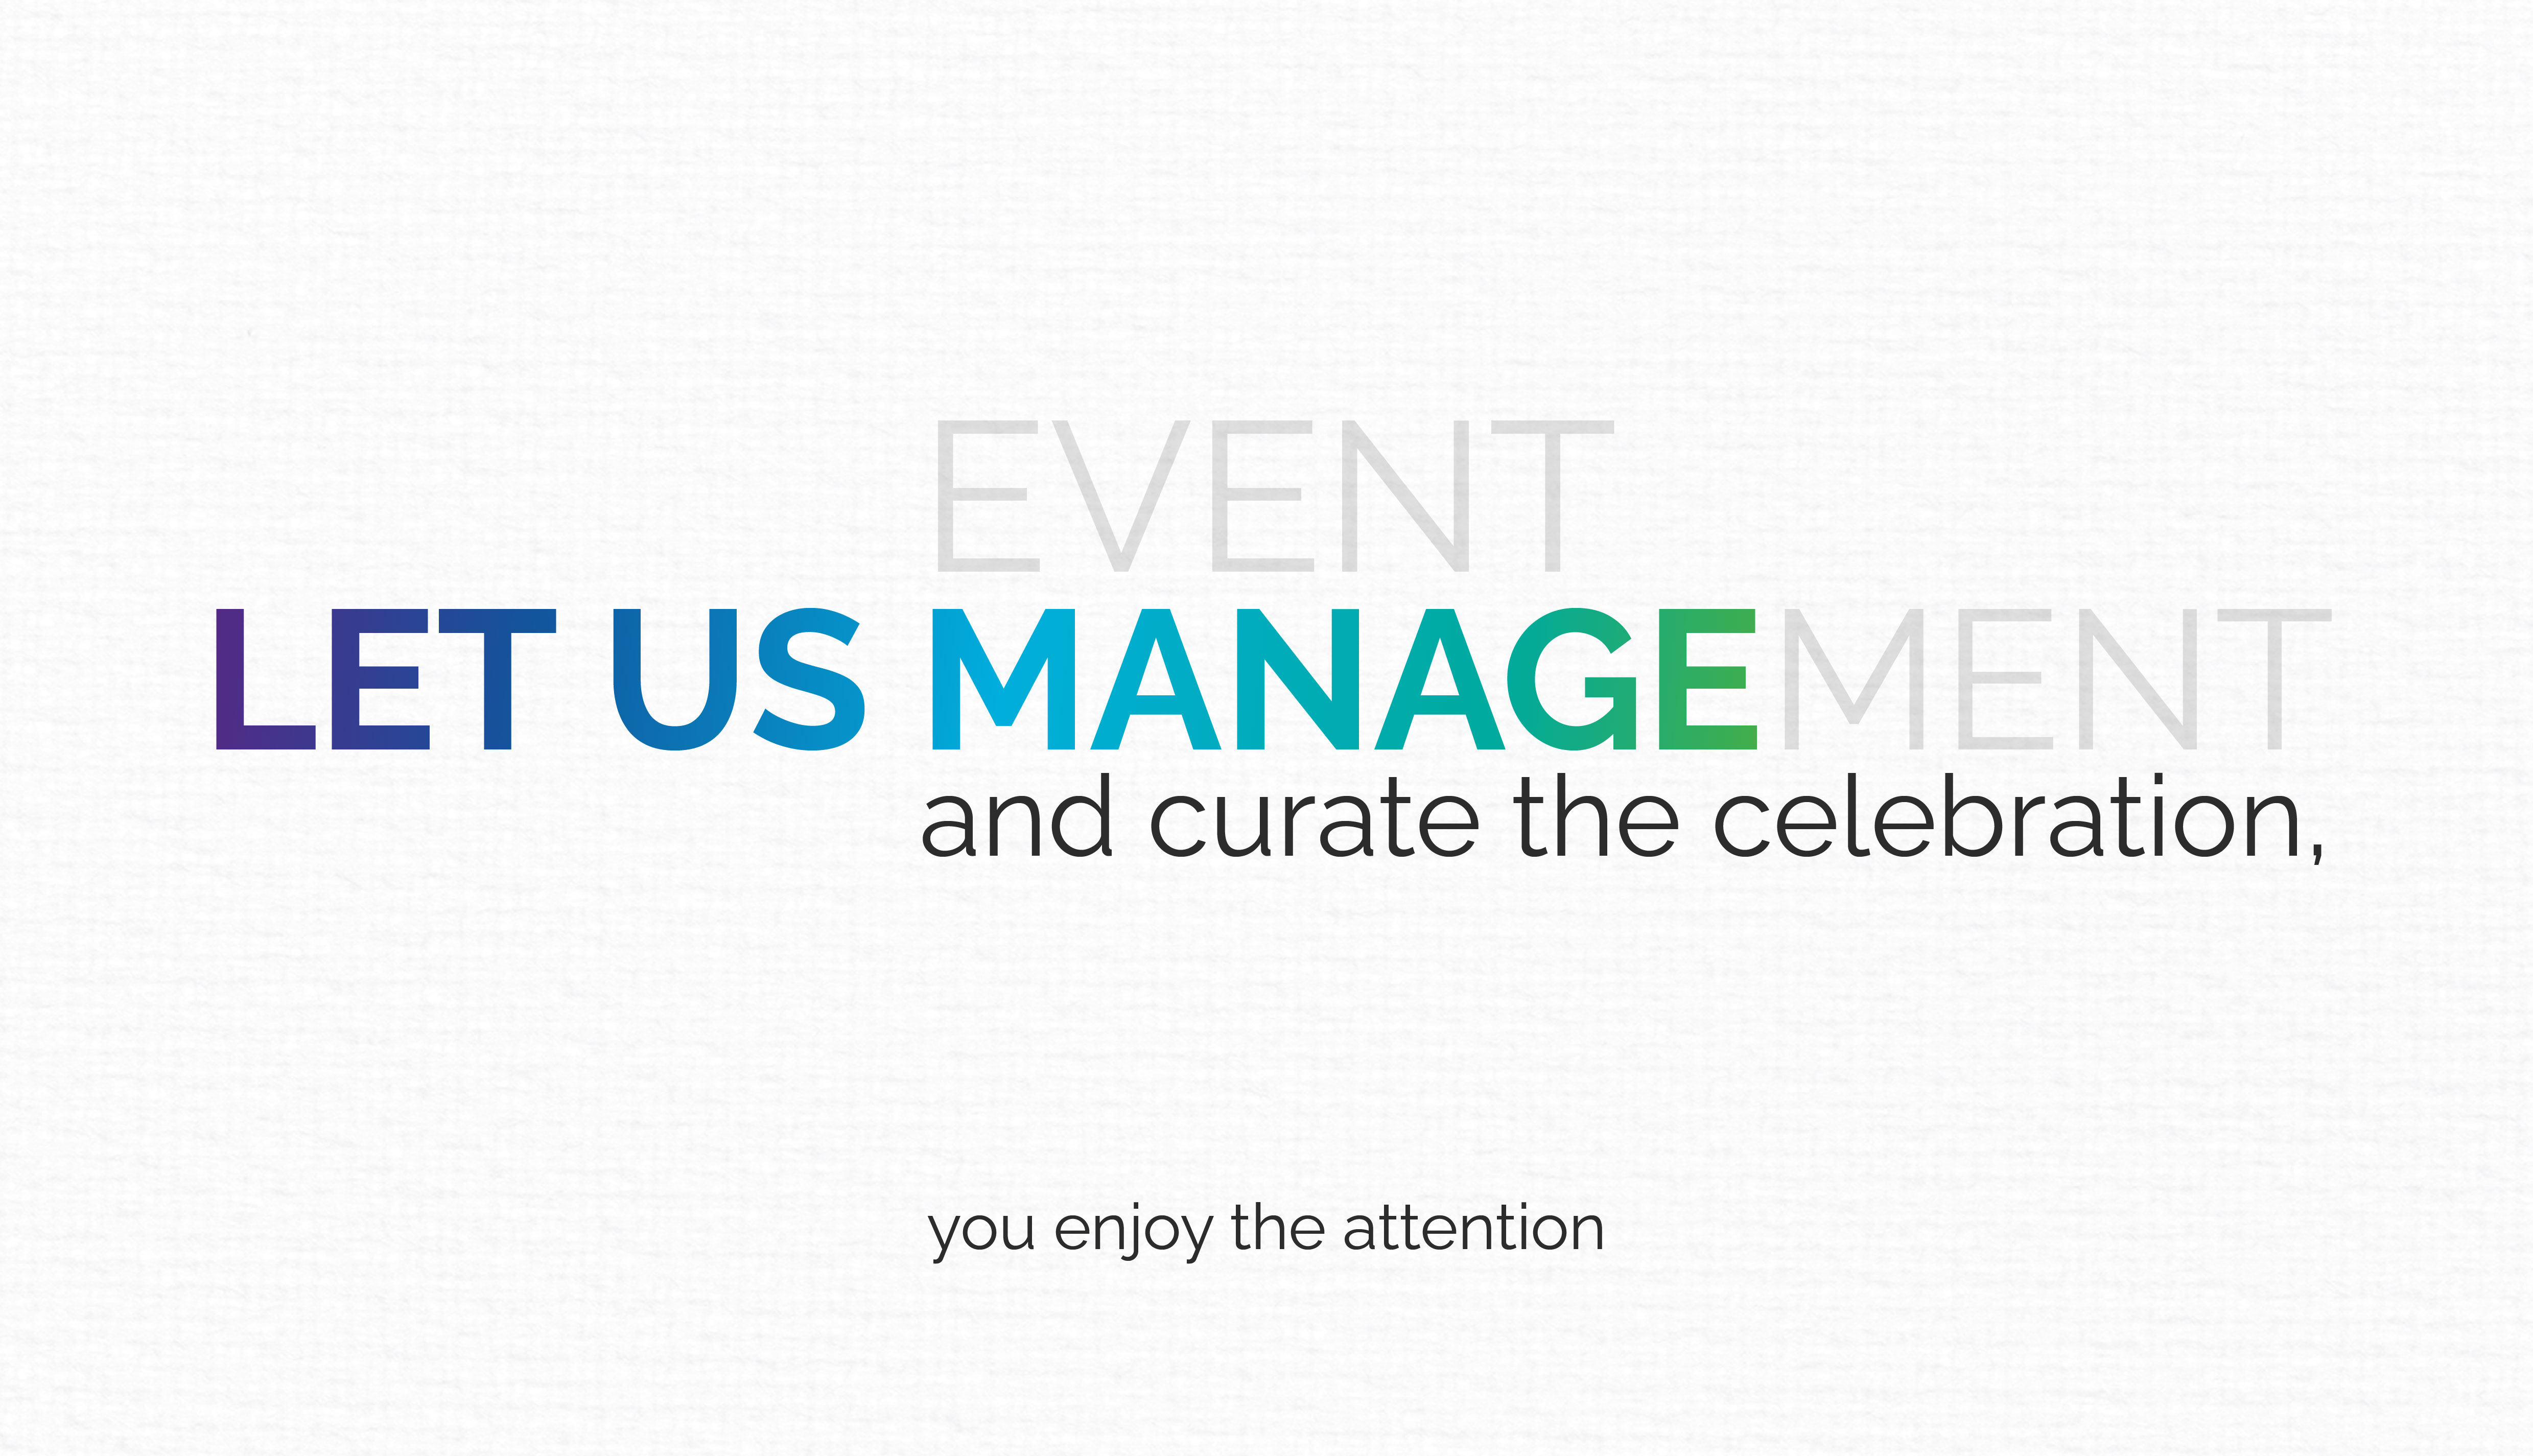 Event Management image